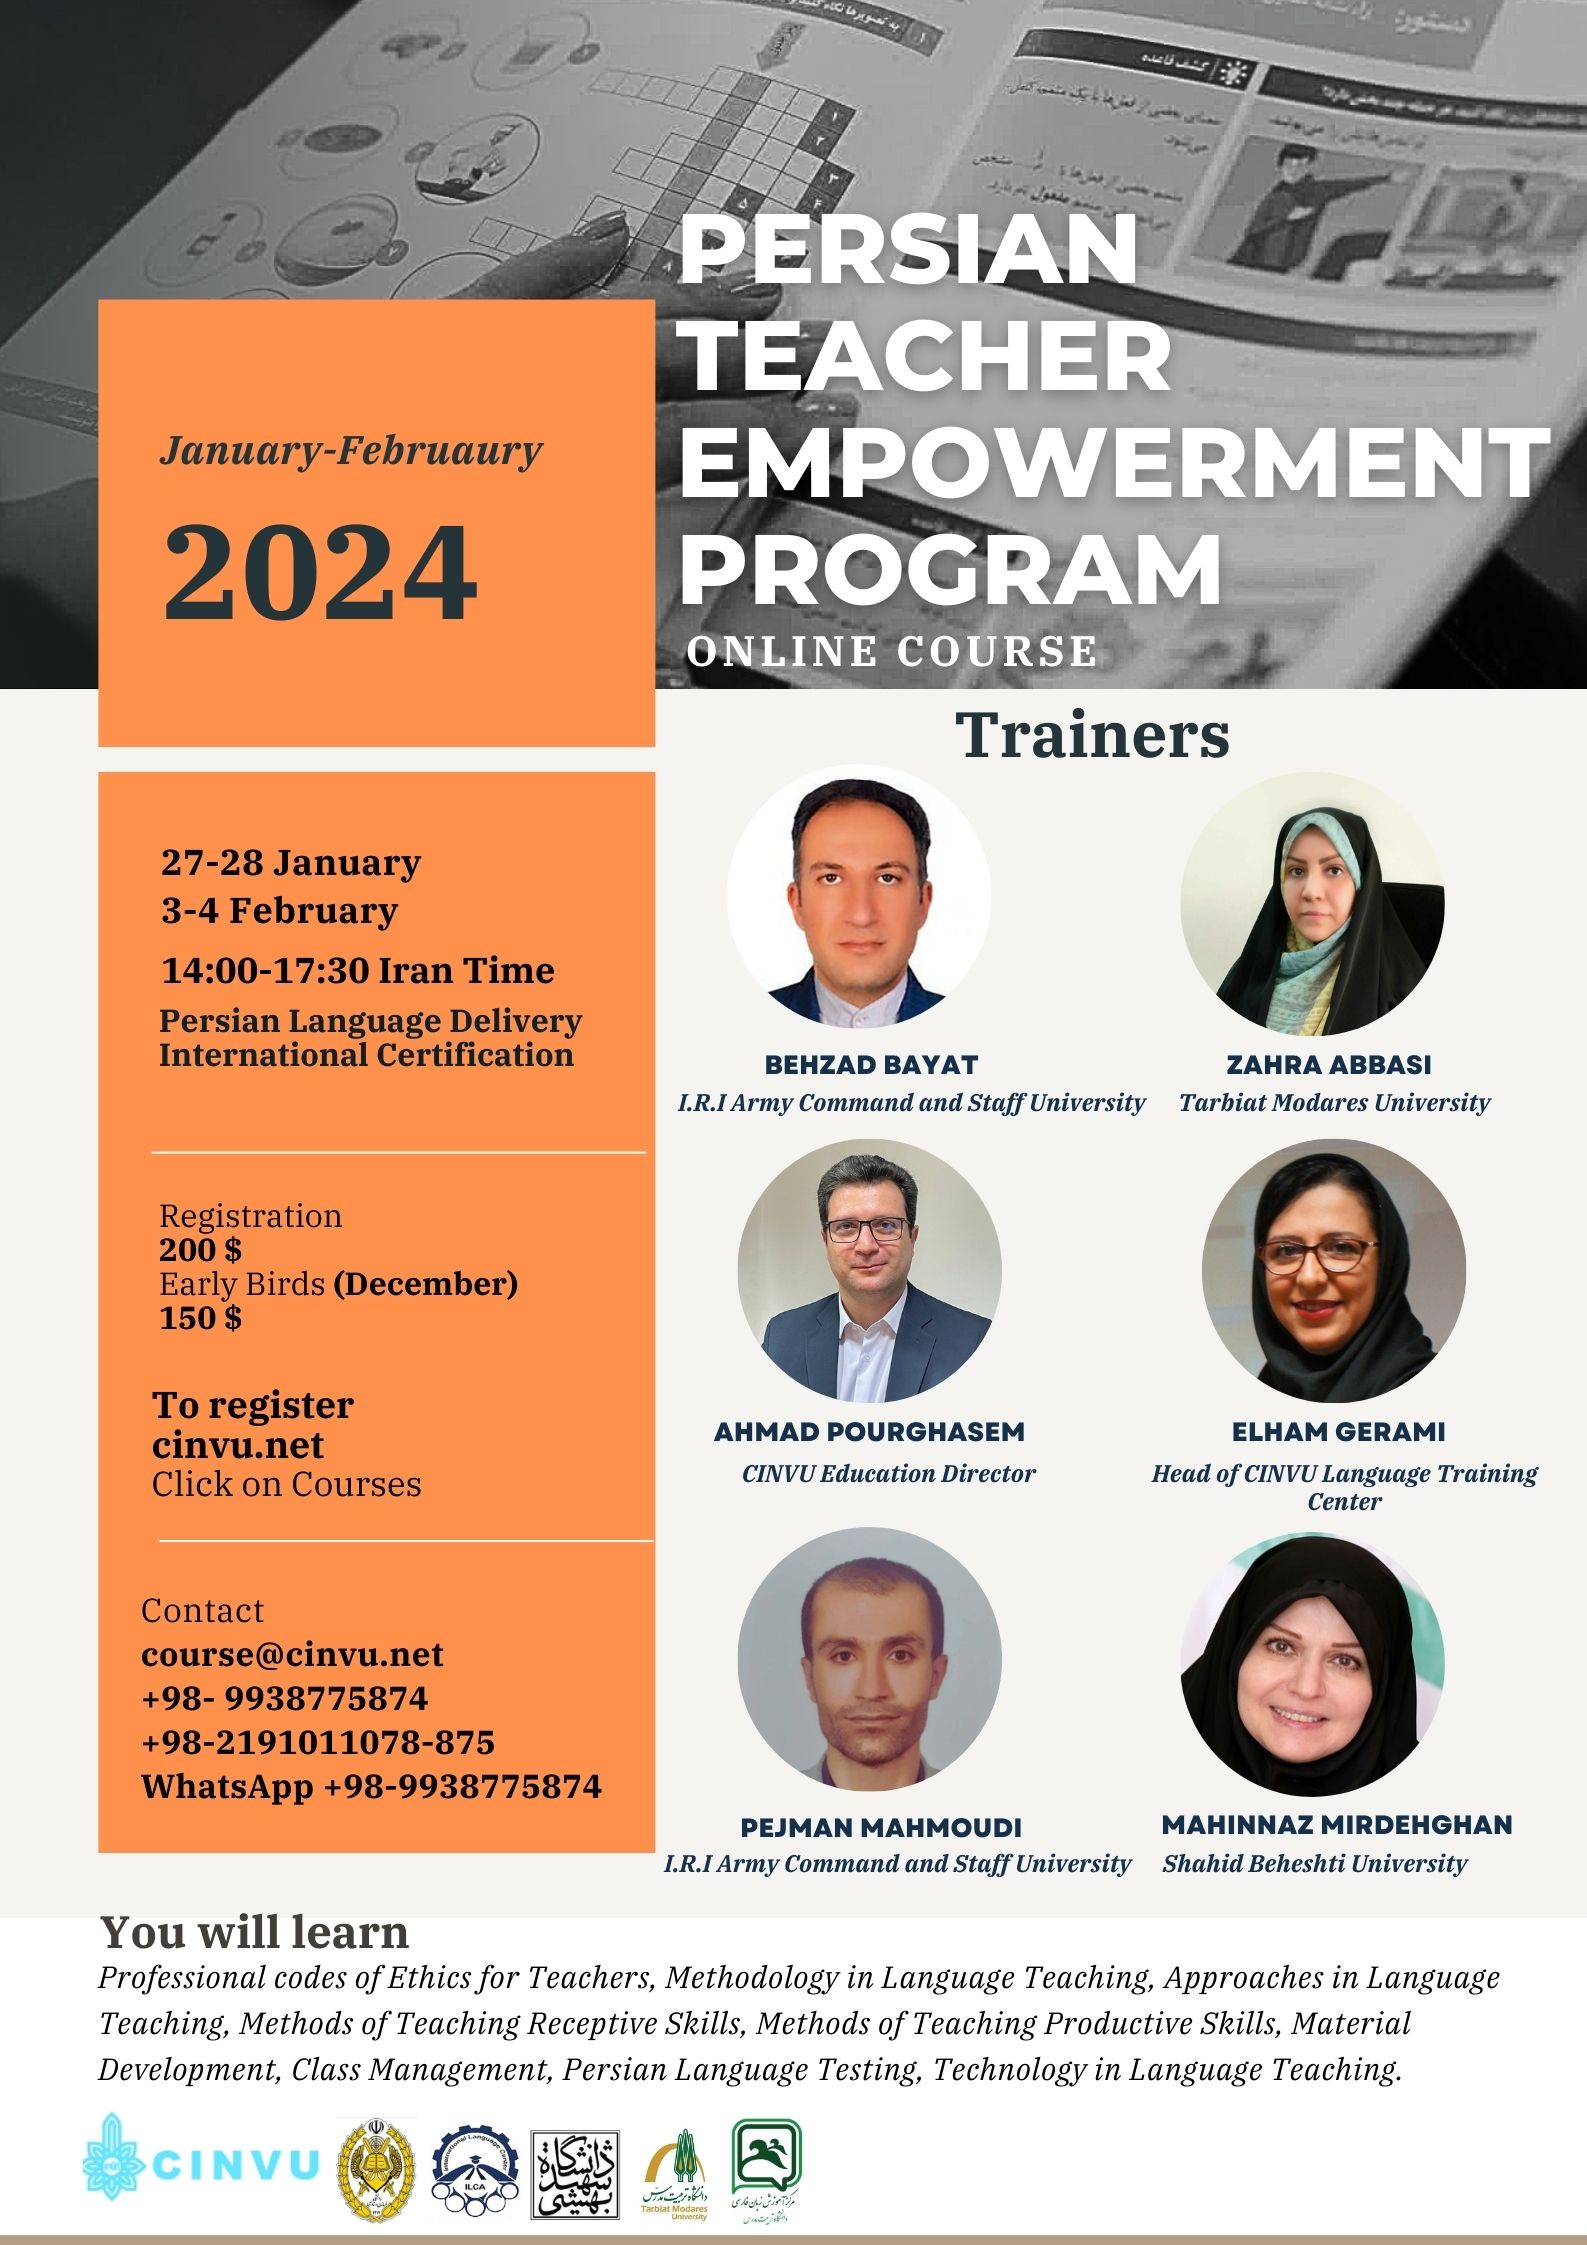 The Persian Teacher Empowerment Program Workshop